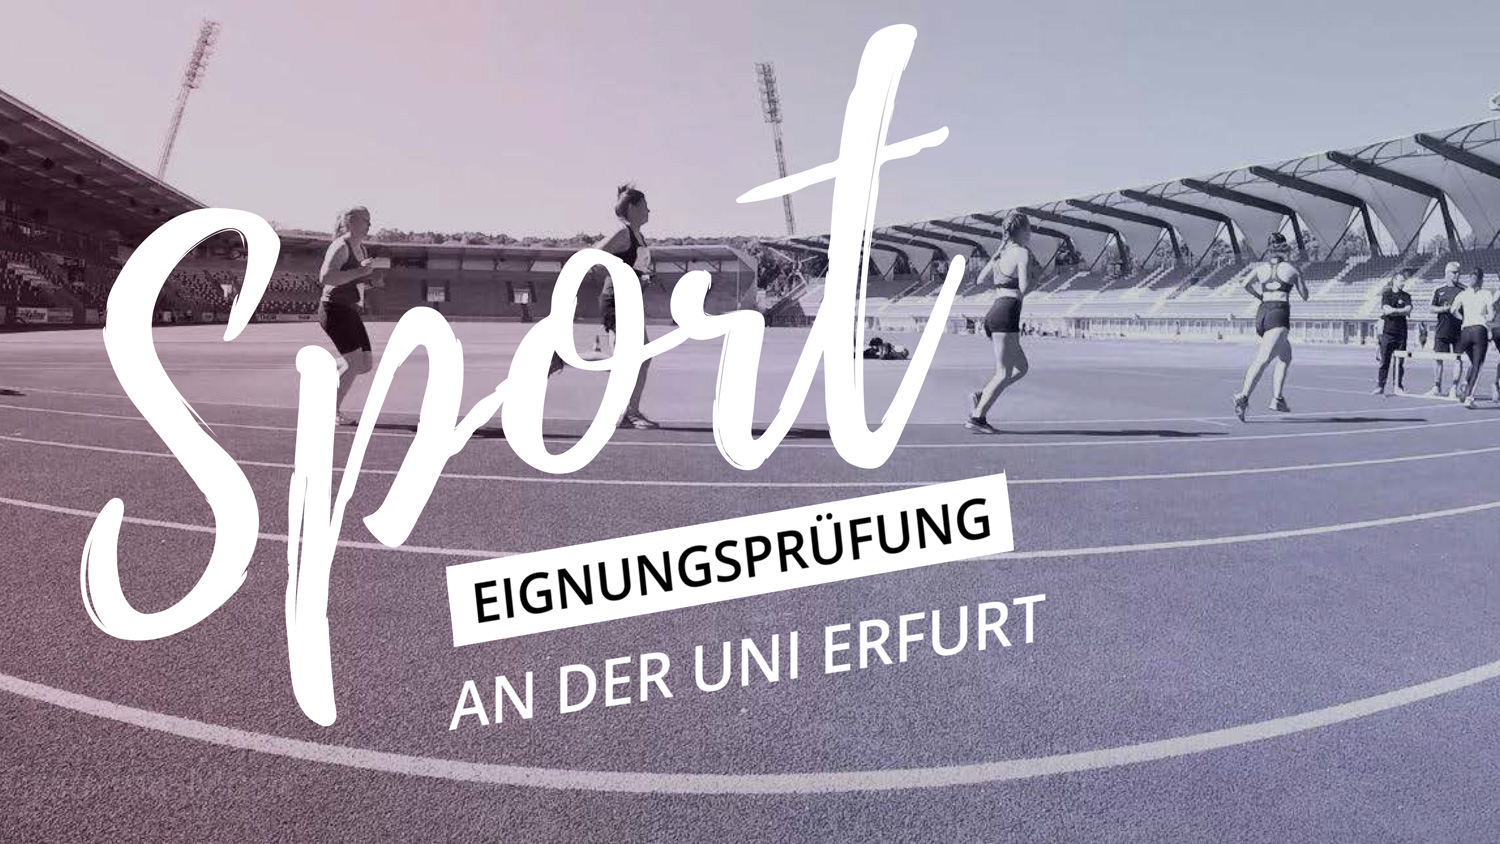 [Translate to English:] Sport Eignungsprüfung